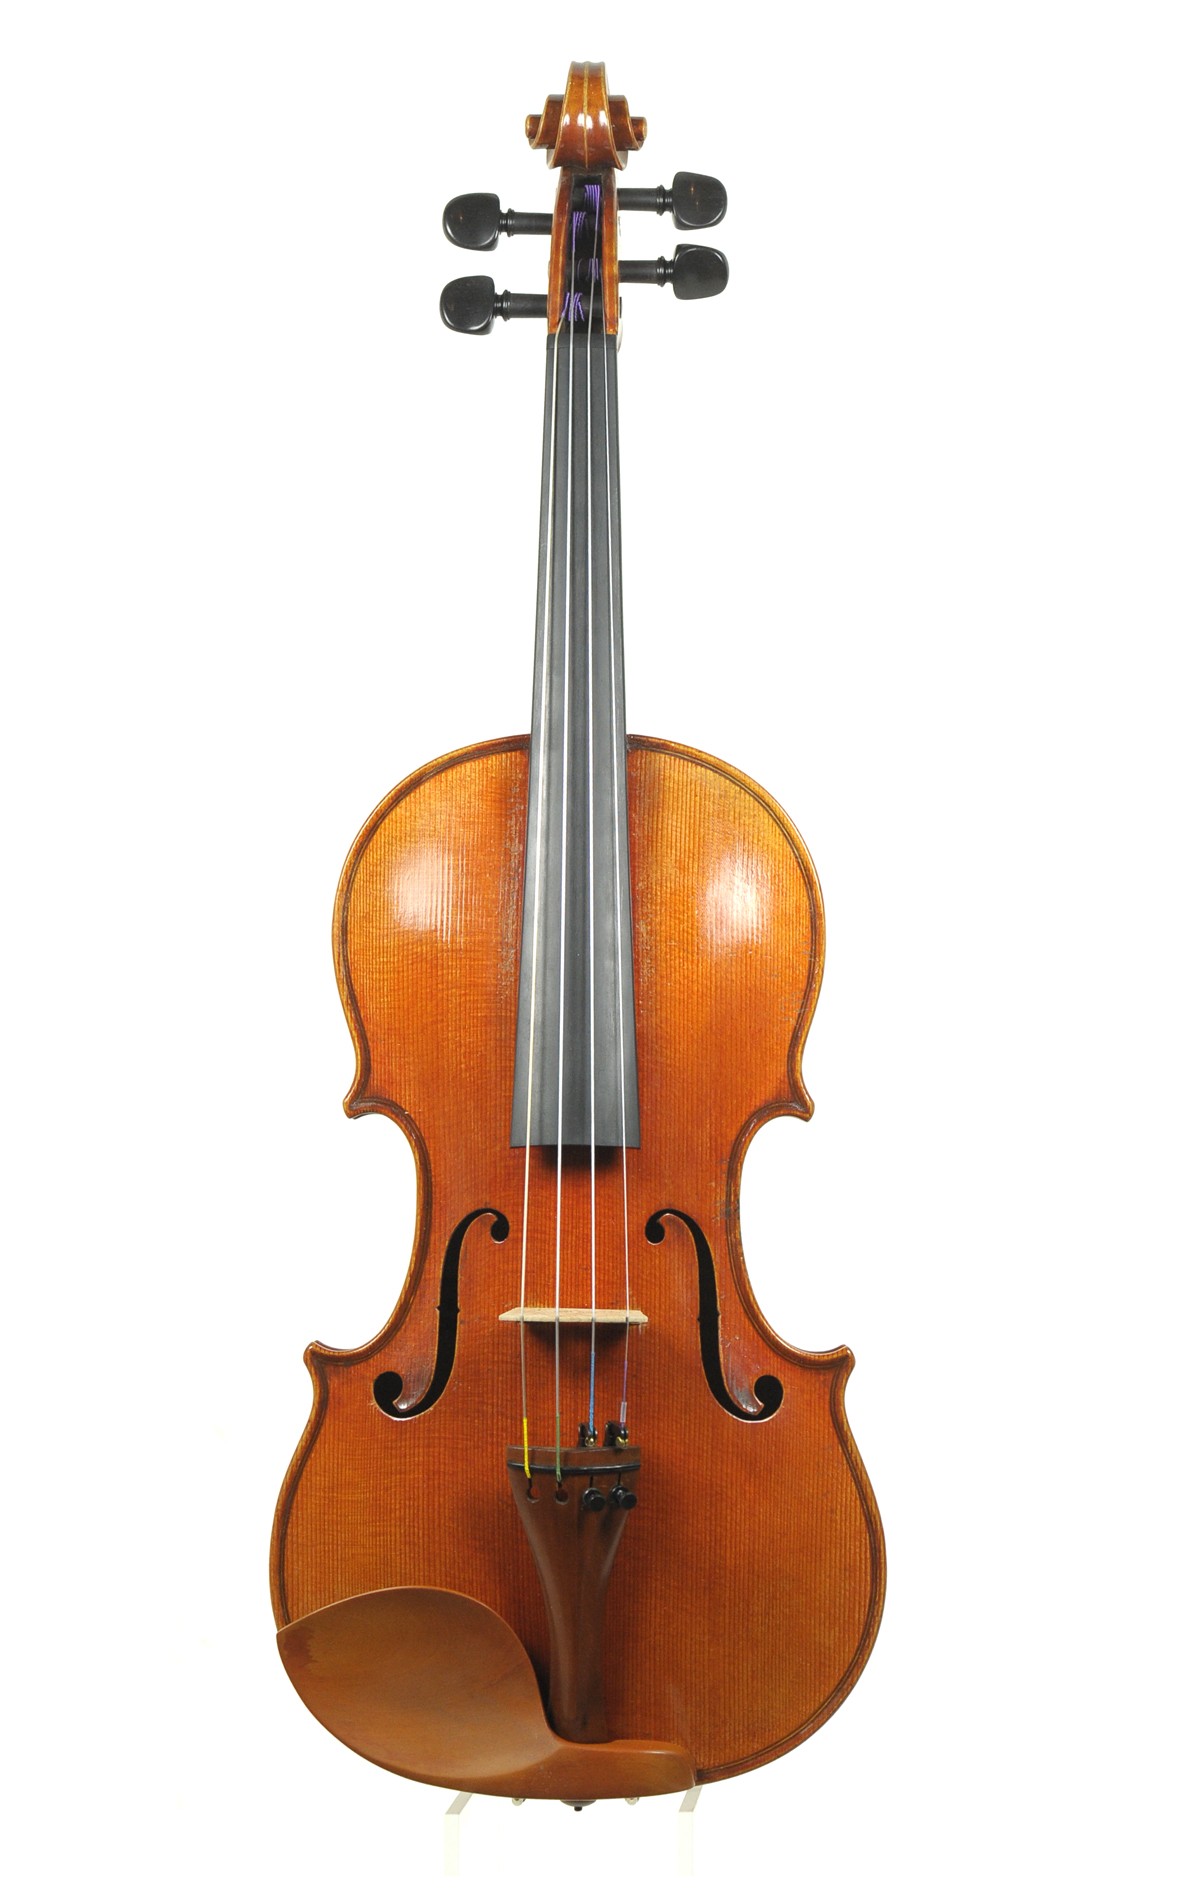 Paul Knorr, Markneukirchen master violin